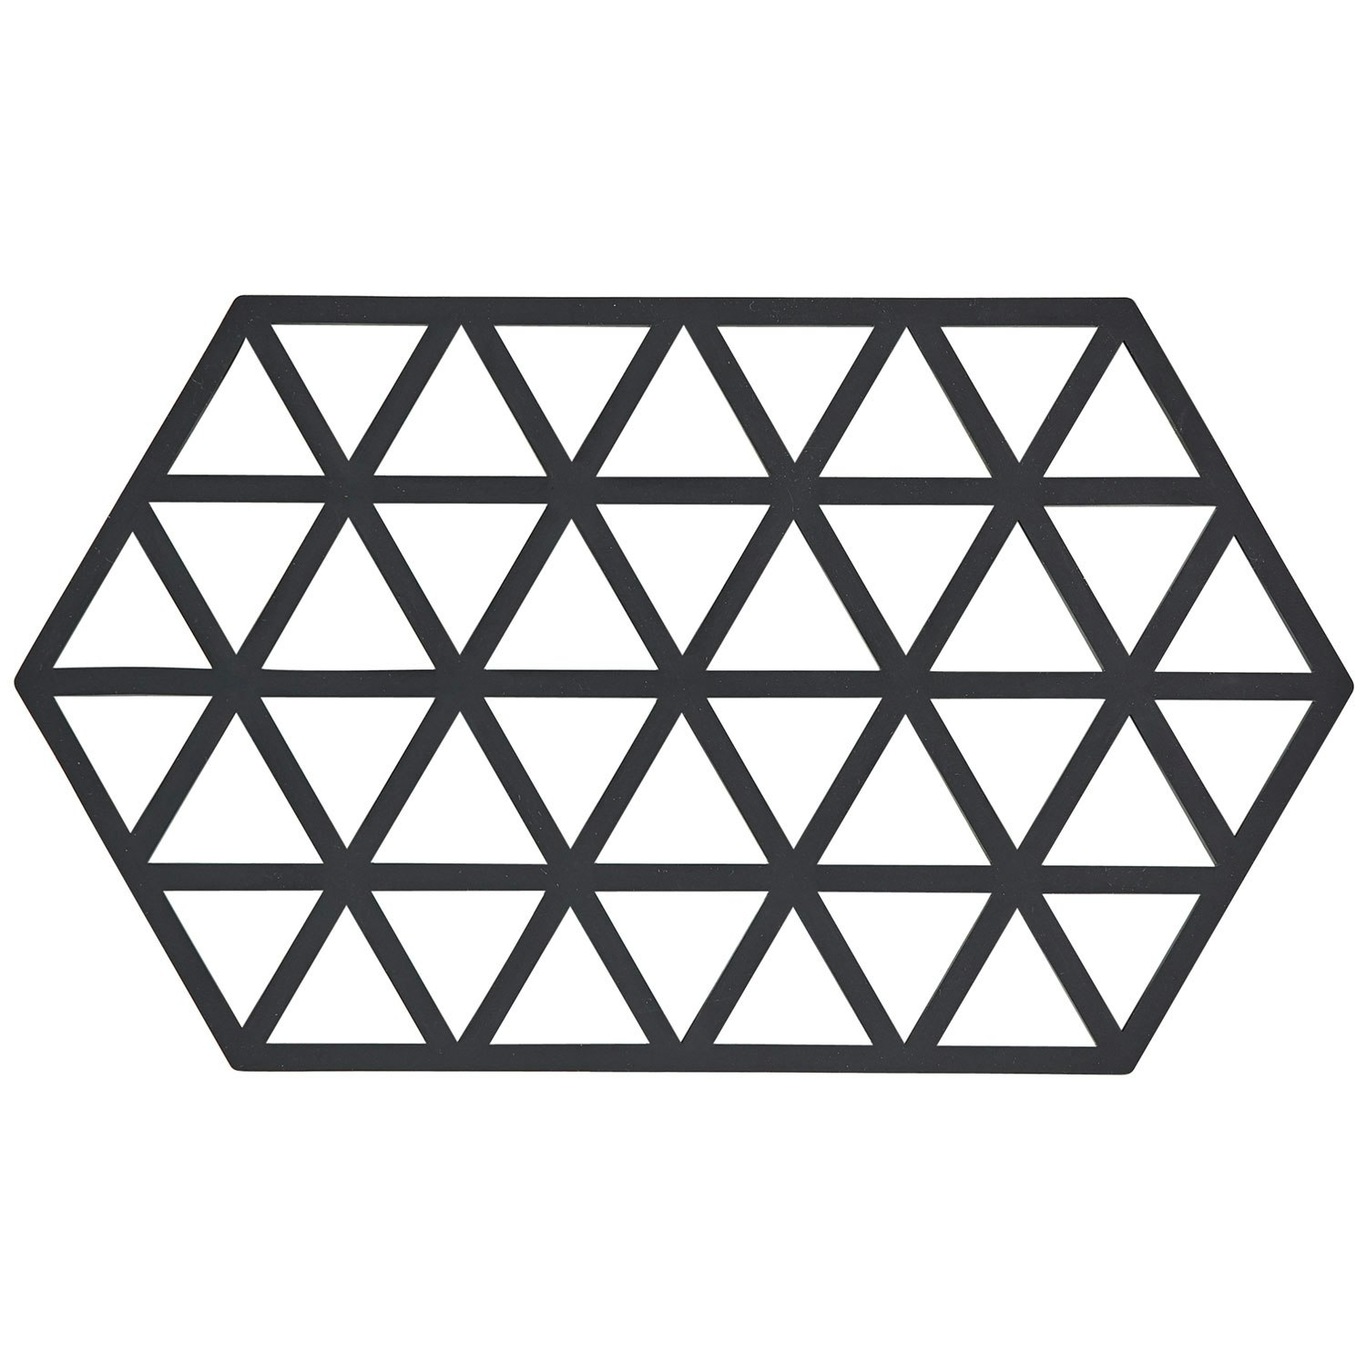 https://royaldesign.com/image/2/zone-denmark-triangle-trivet-large-0?w=800&quality=80